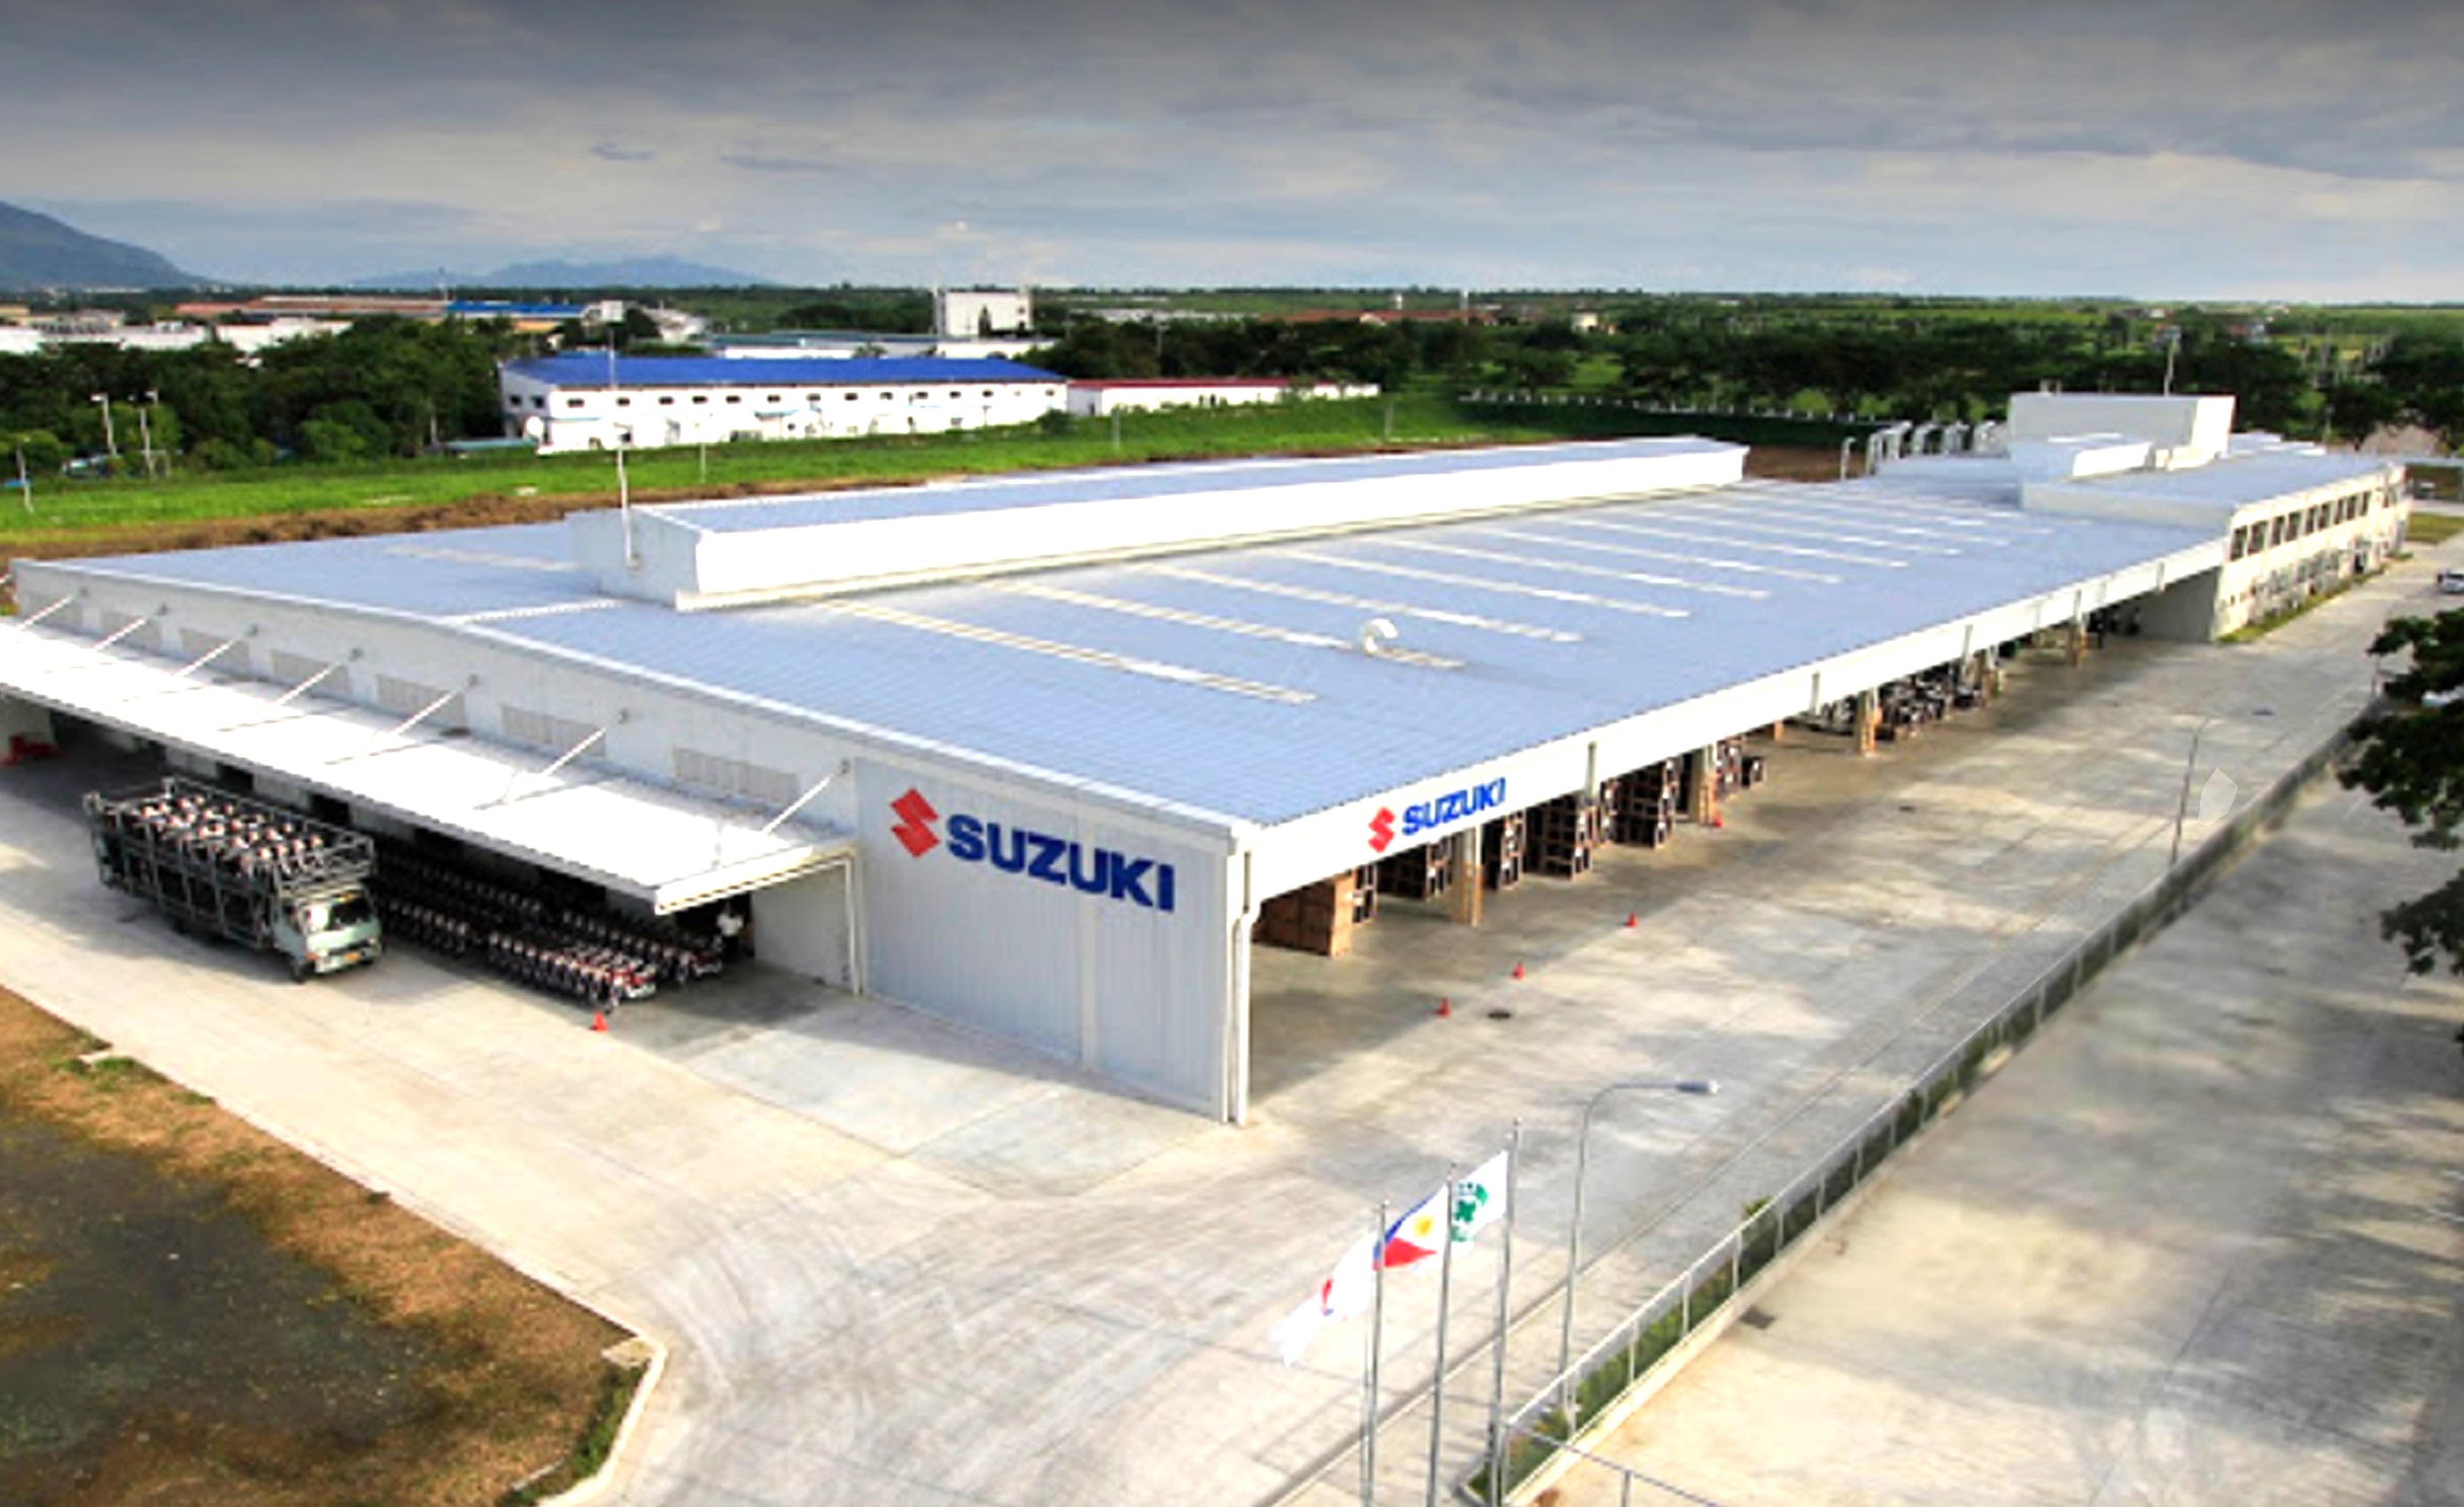 Suzuki Philippines' manufacturing plant in Carmelray Industrial Park, Canlubang, Calamba City, Laguna